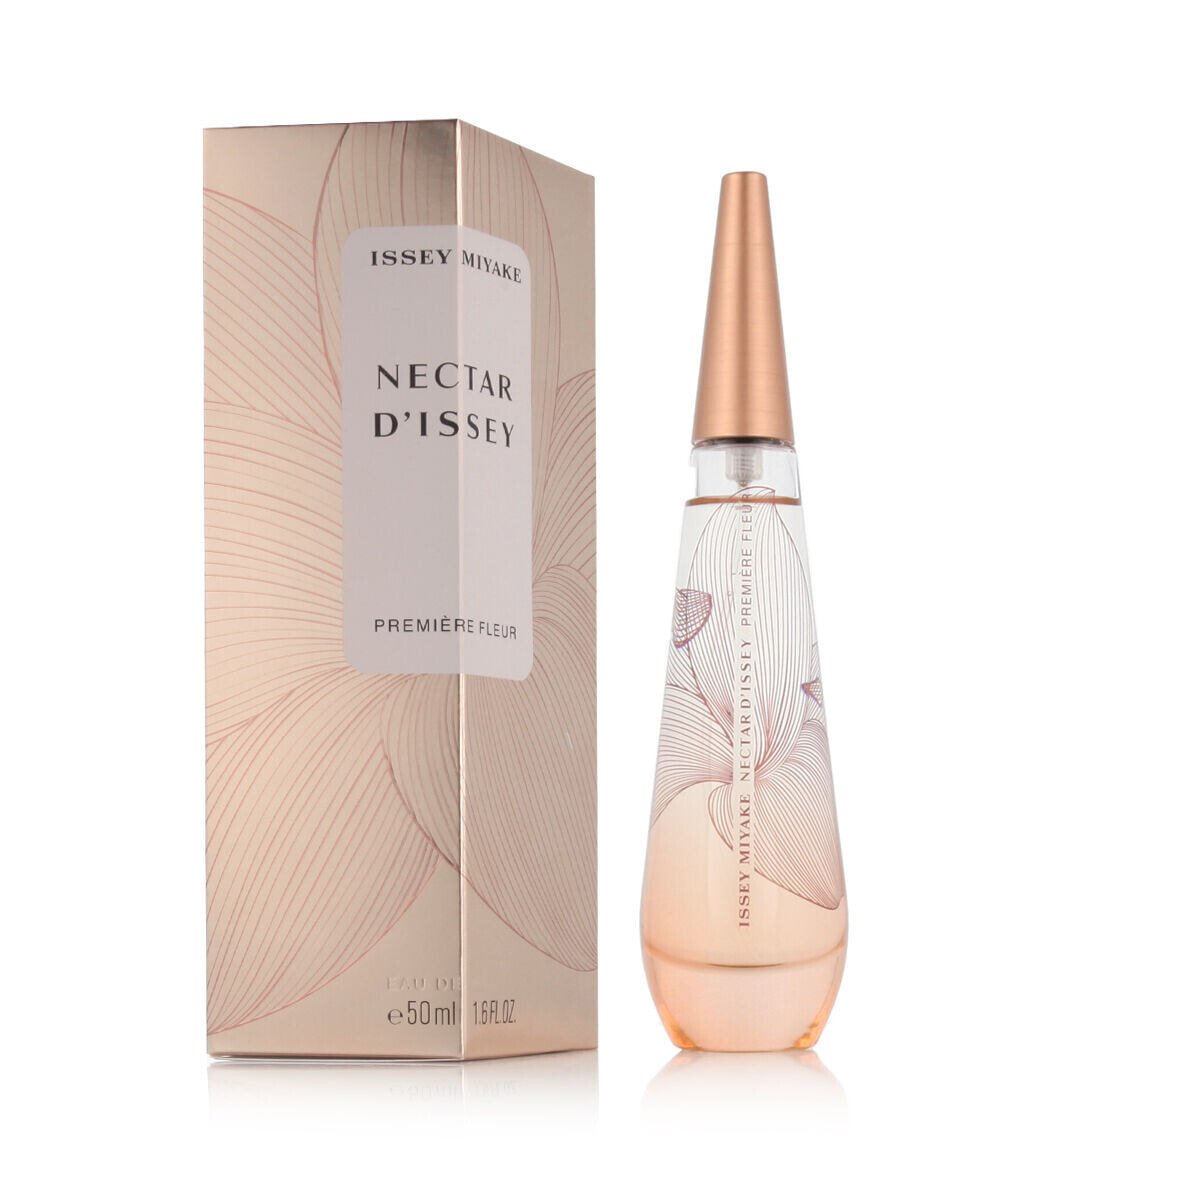 Women's Perfume Issey Miyake EDP Nectar D’Issey Premiere Fleur 50 ml